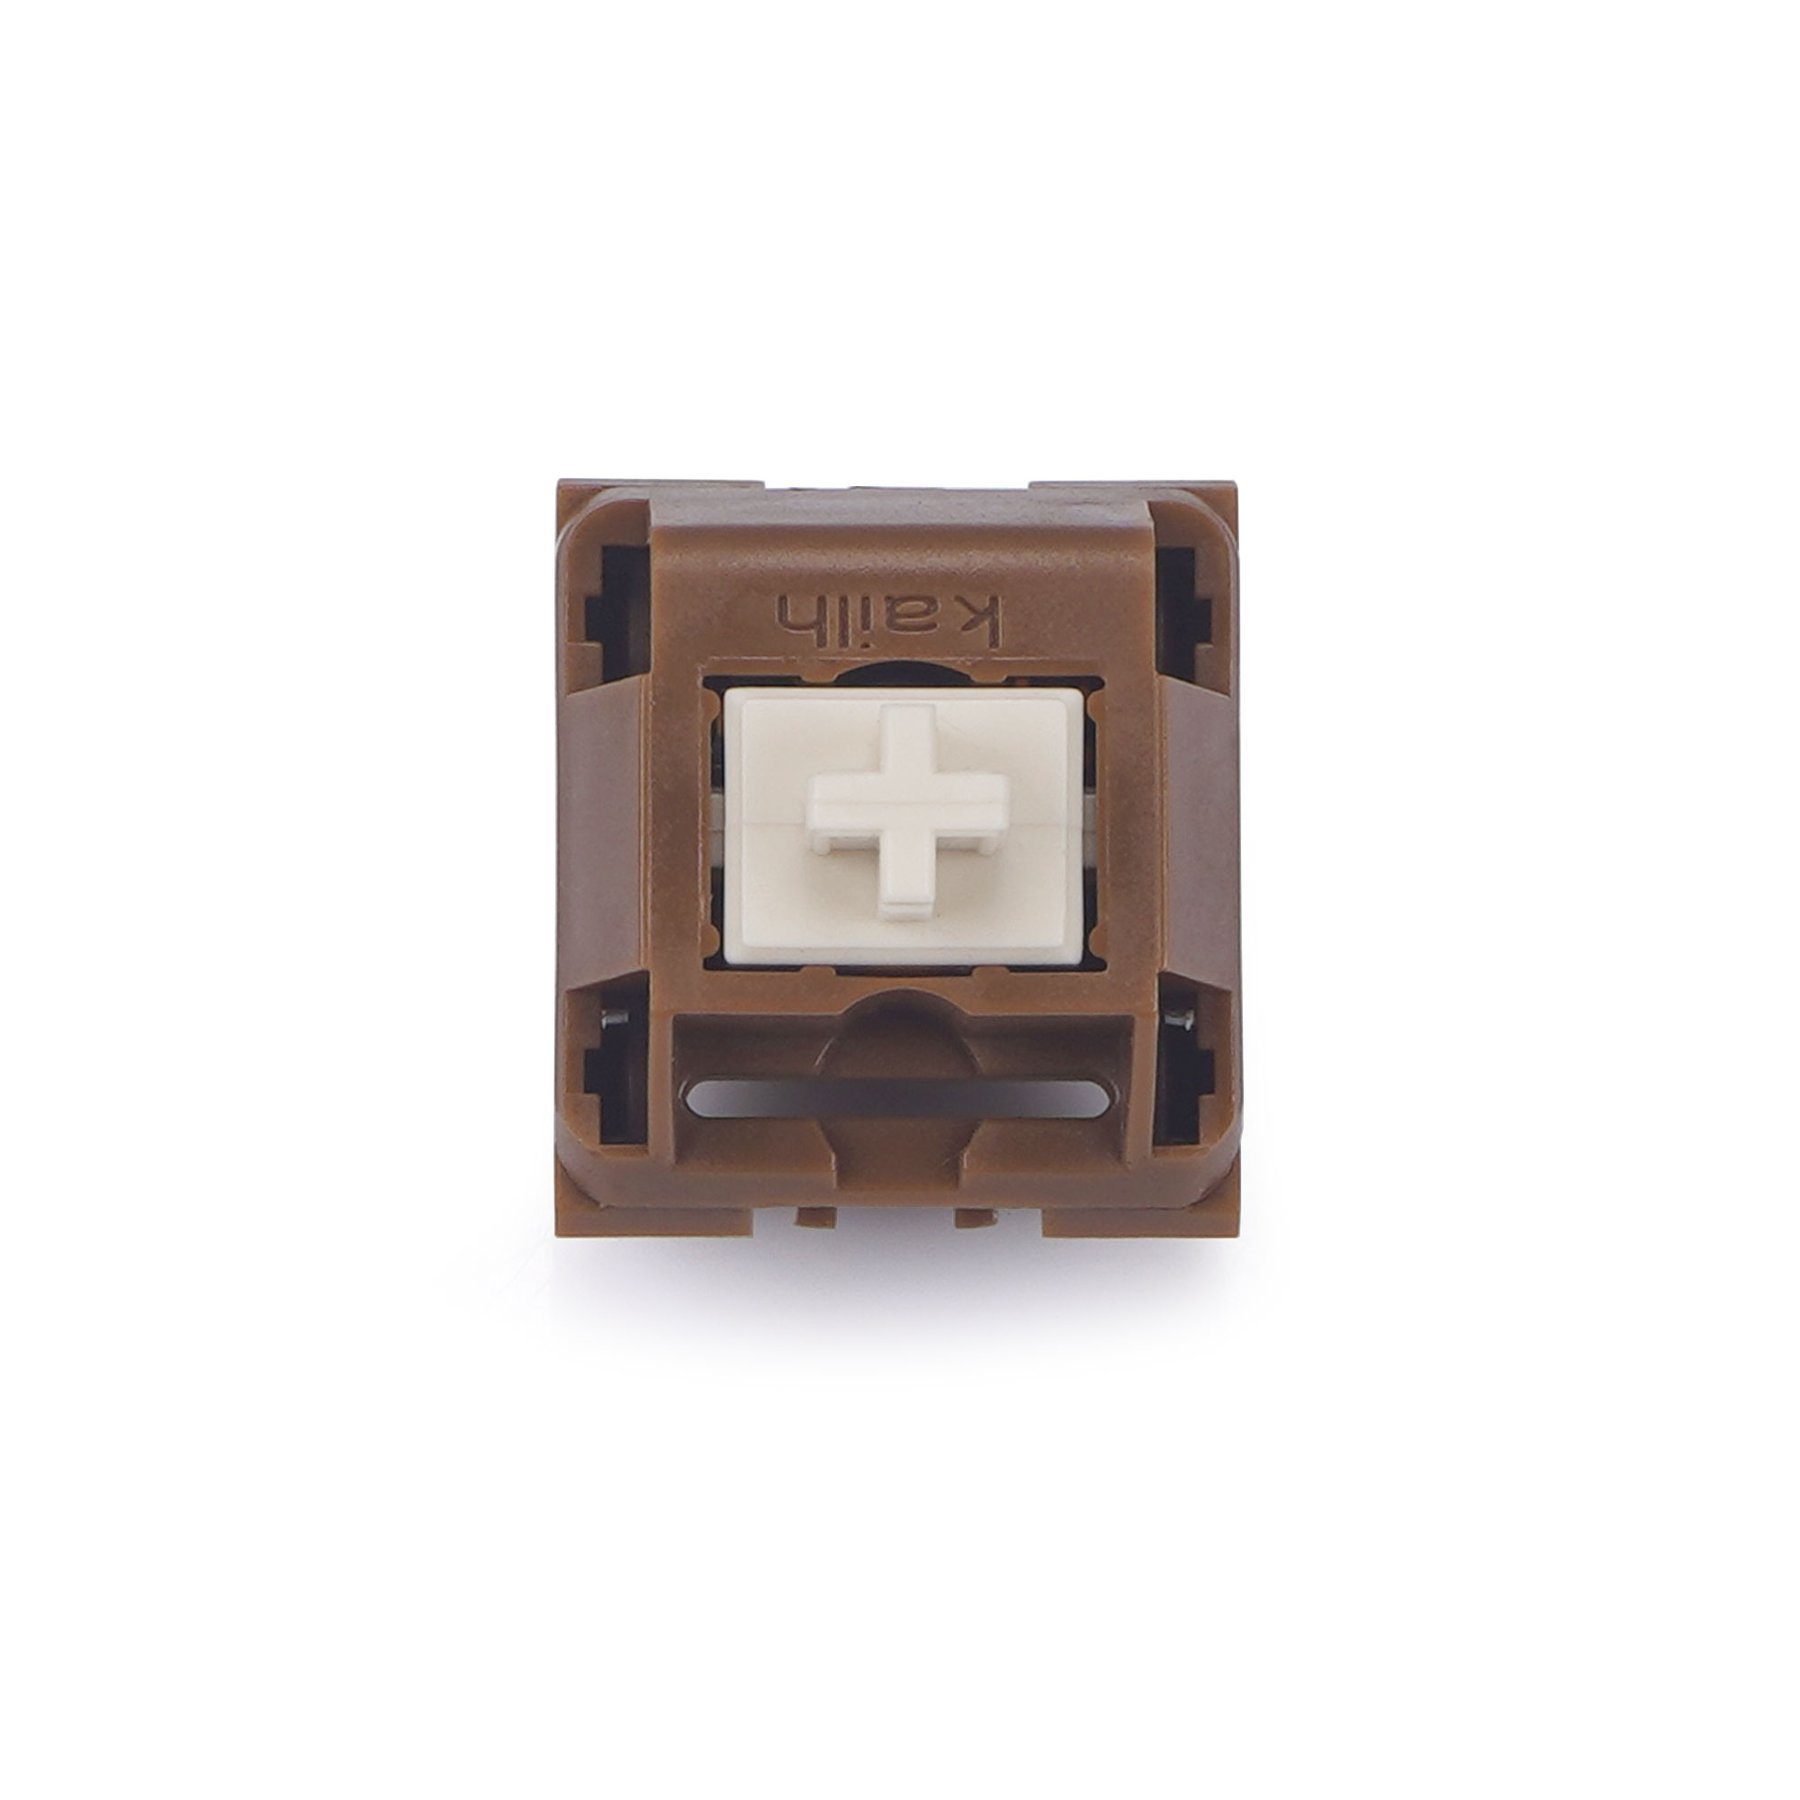 Novelkeys Cream Chocolate Pom PCB Mount 5 pin Switch